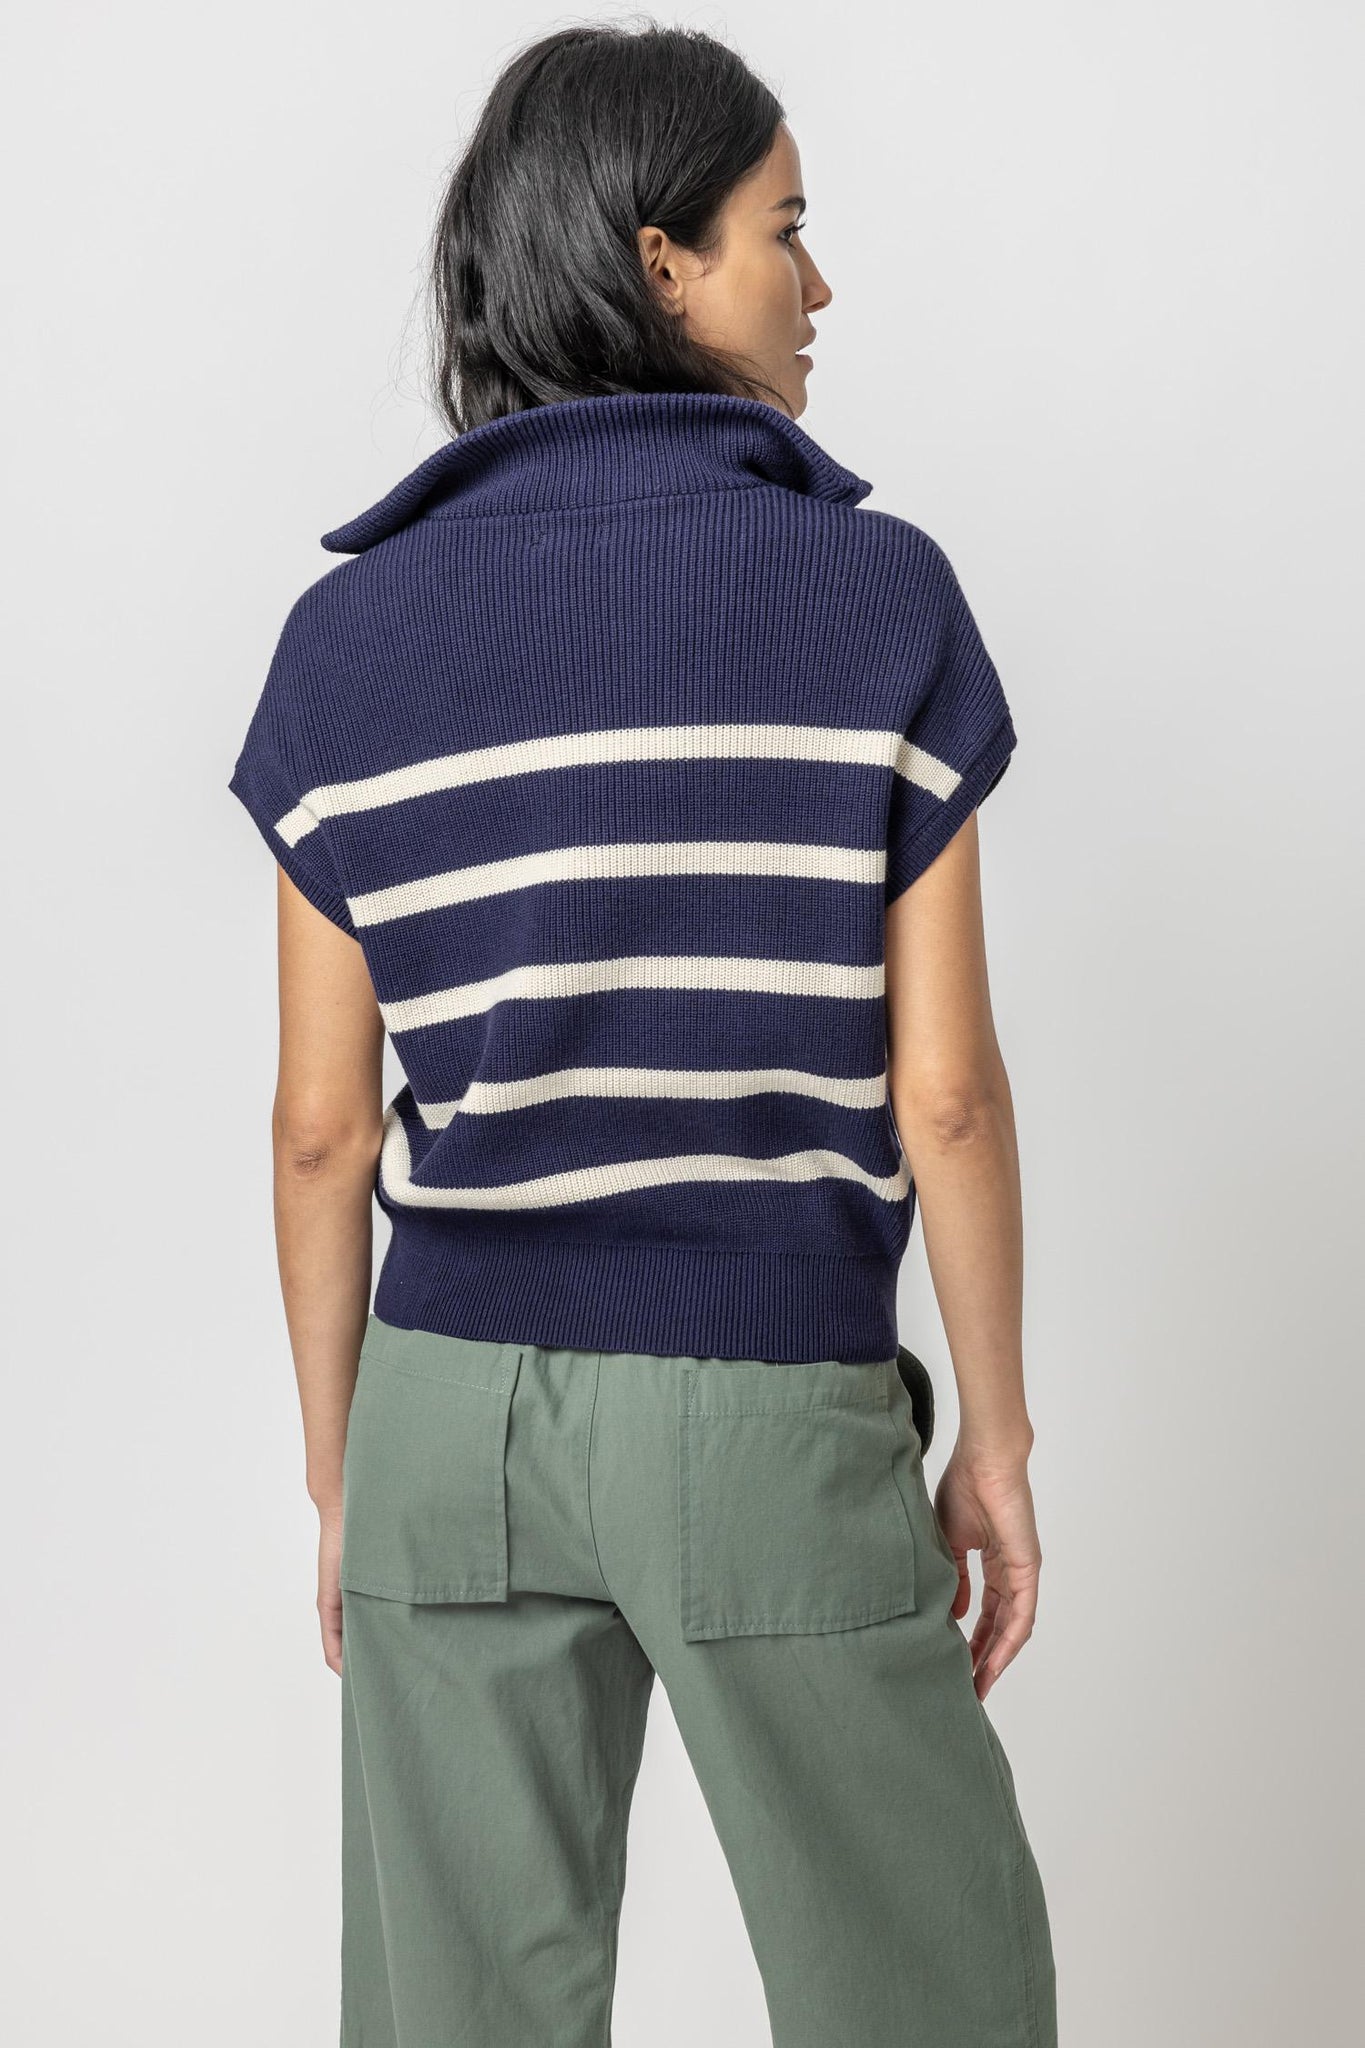 Lilla P Half Zip Striped Sweater - Navy Stripe